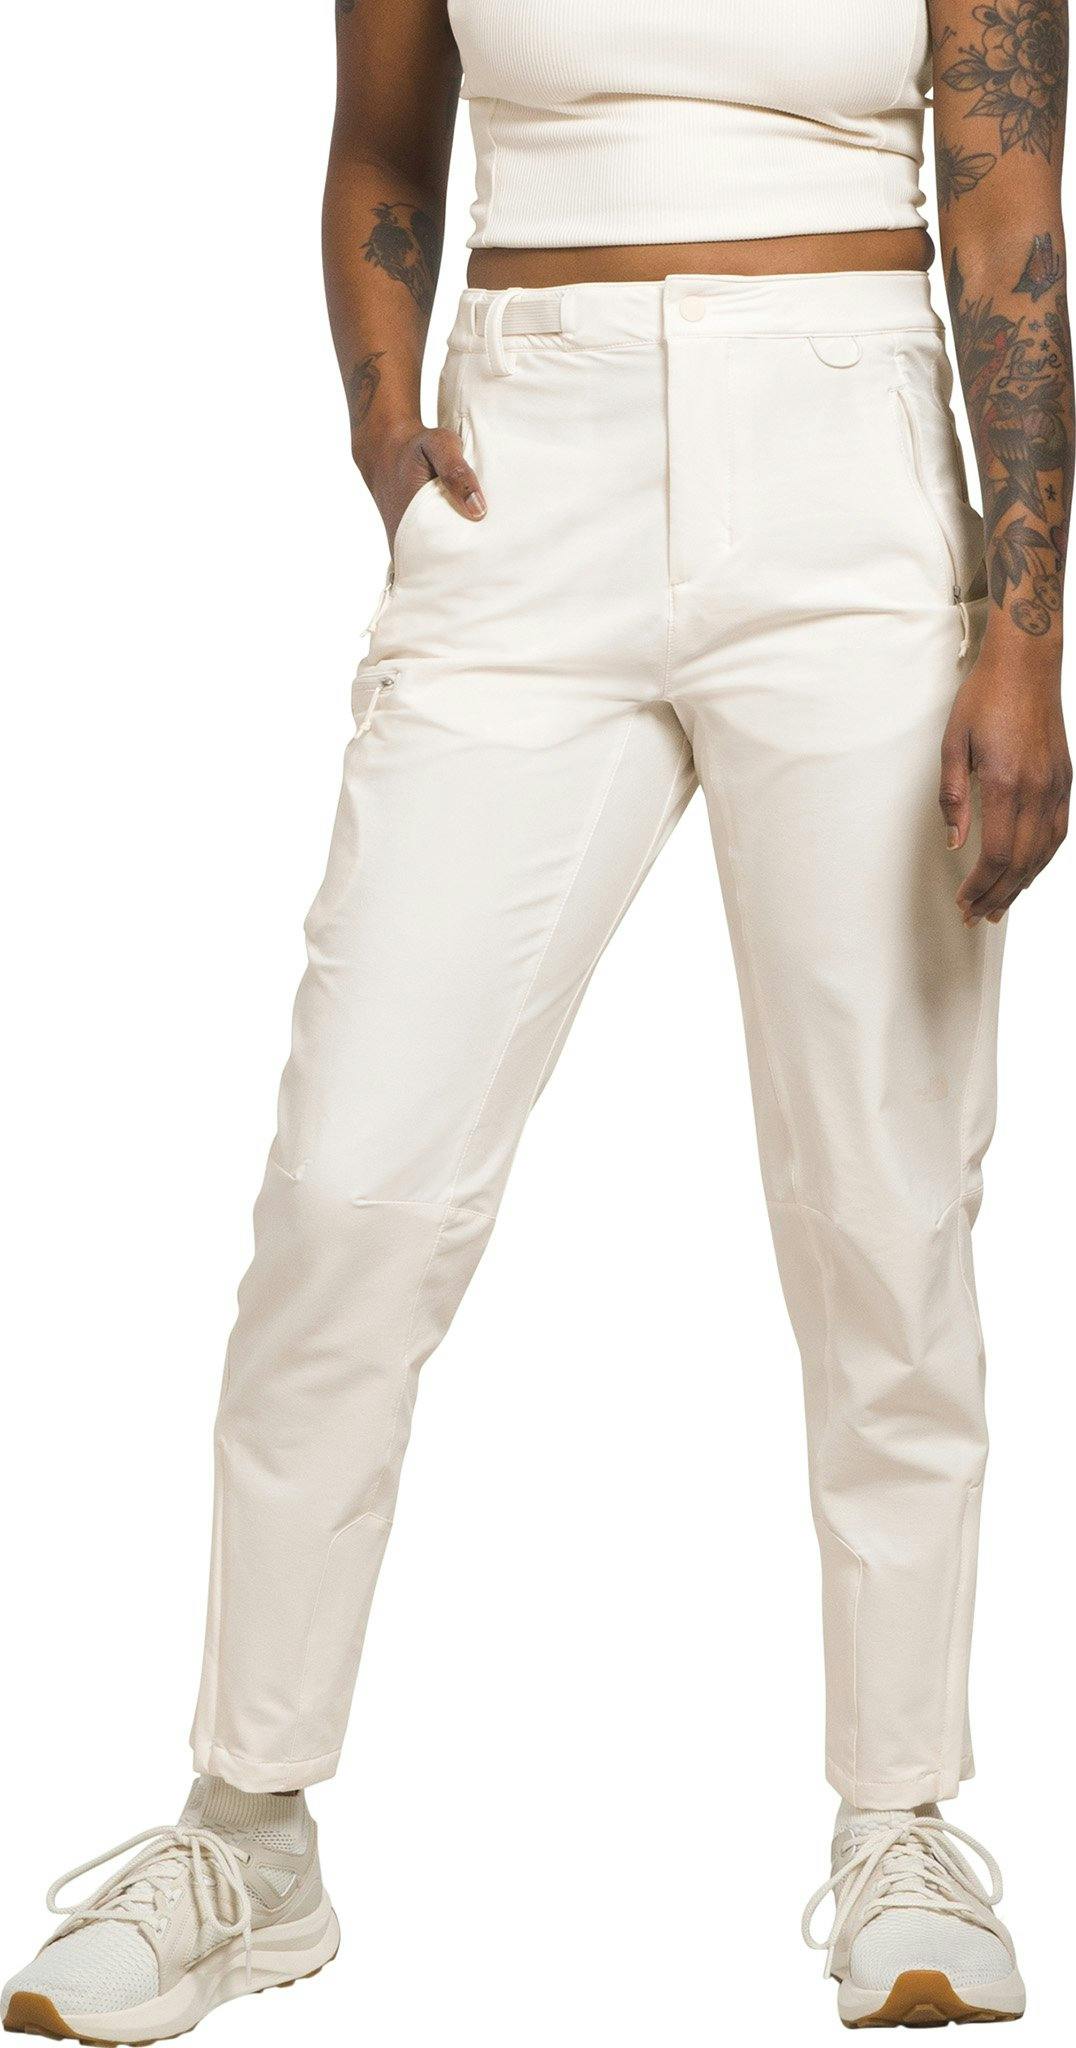 Product image for Bridgeway Pro Pants - Women's